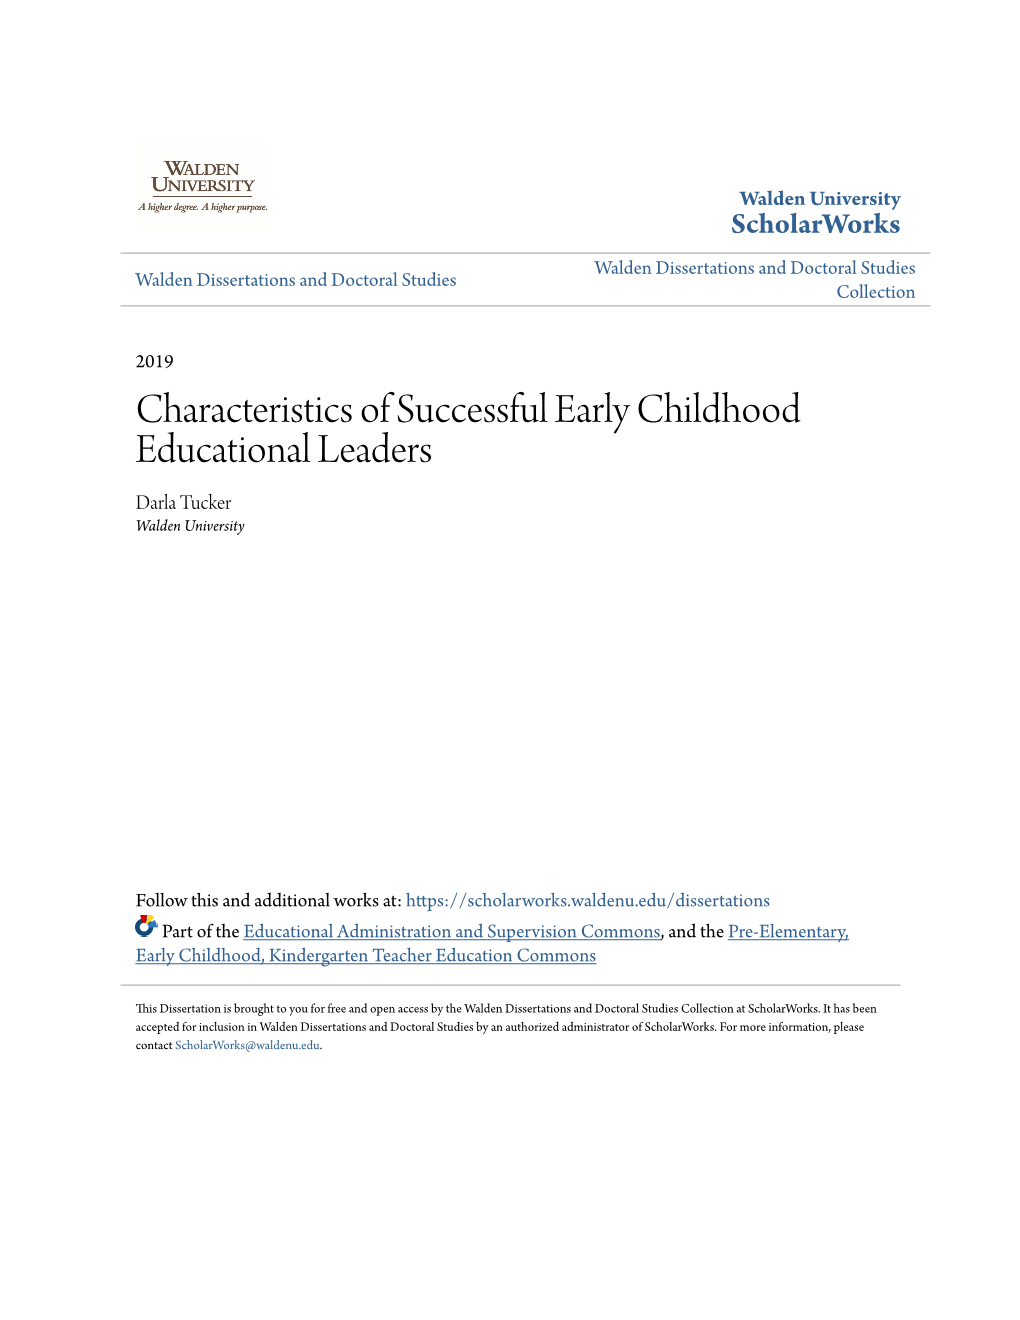 Characteristics of Successful Early Childhood Educational Leaders Darla Tucker Walden University